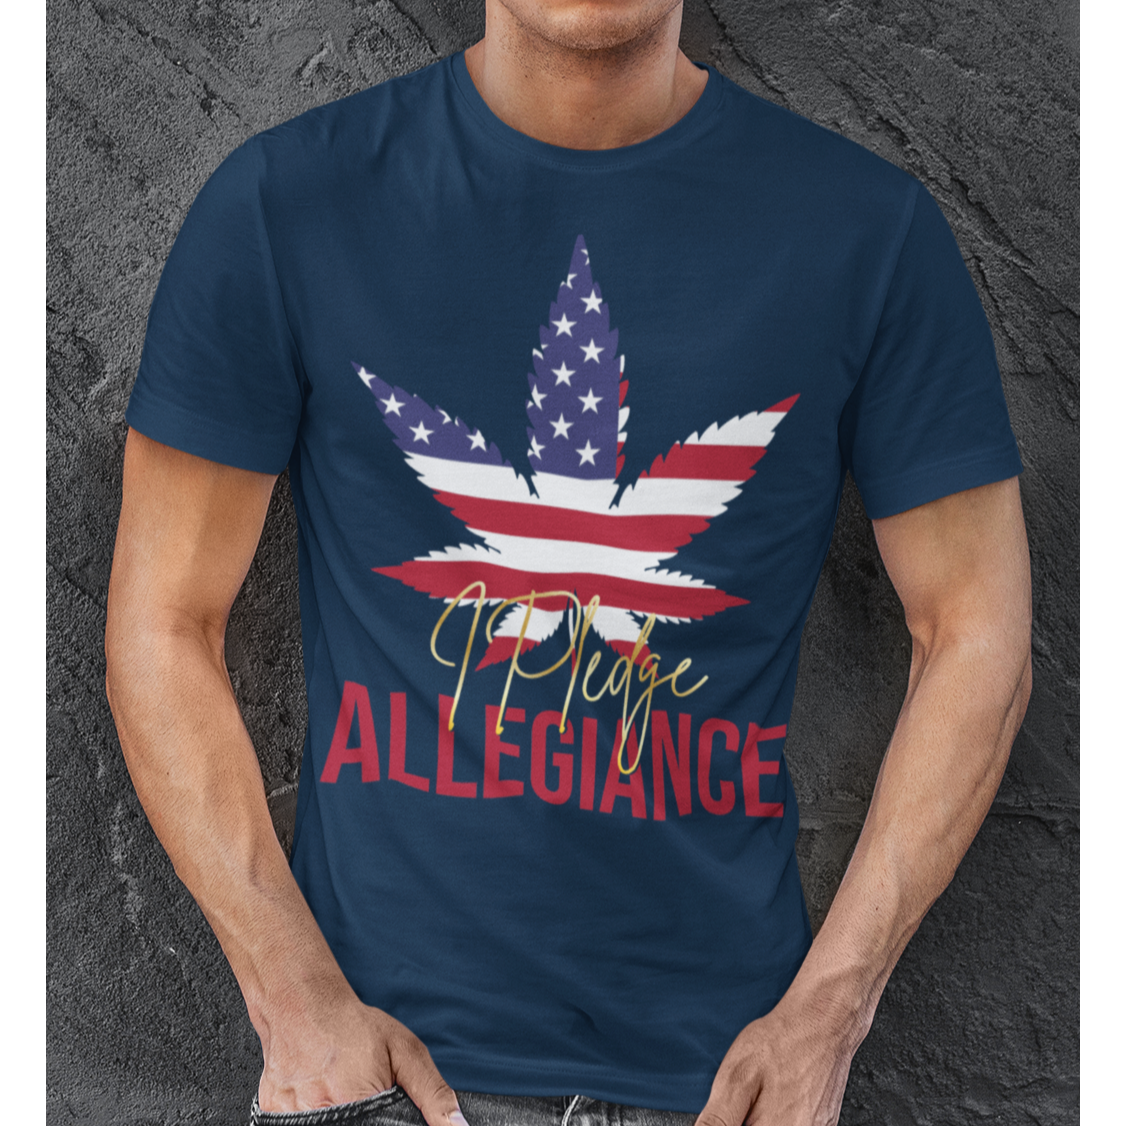 I Pledge Allegiance tshirt - Wilson Design Group